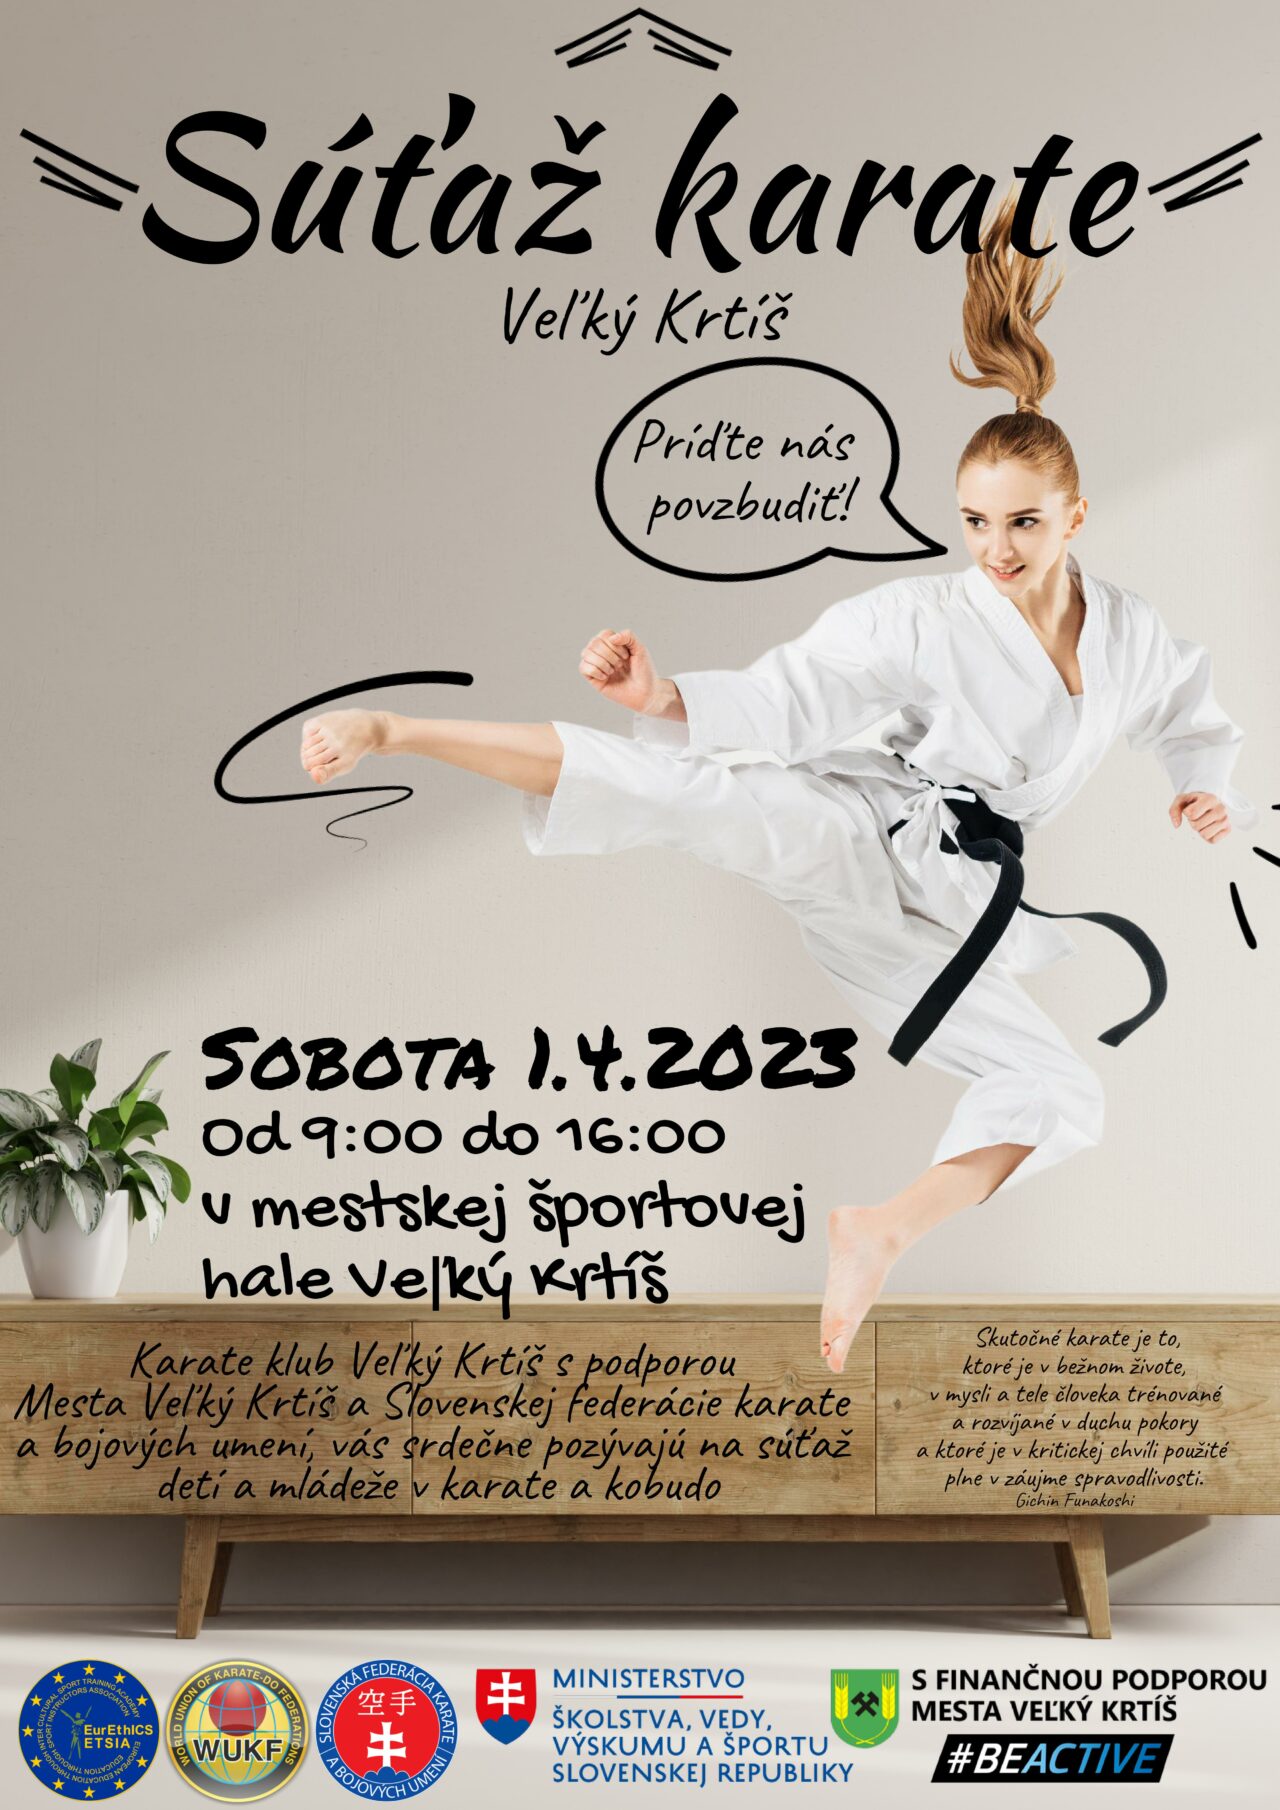 https://karate-slovakia.sk/wp-content/uploads/Plagat-sutaz-karate-VK-1-1280x1810.jpg